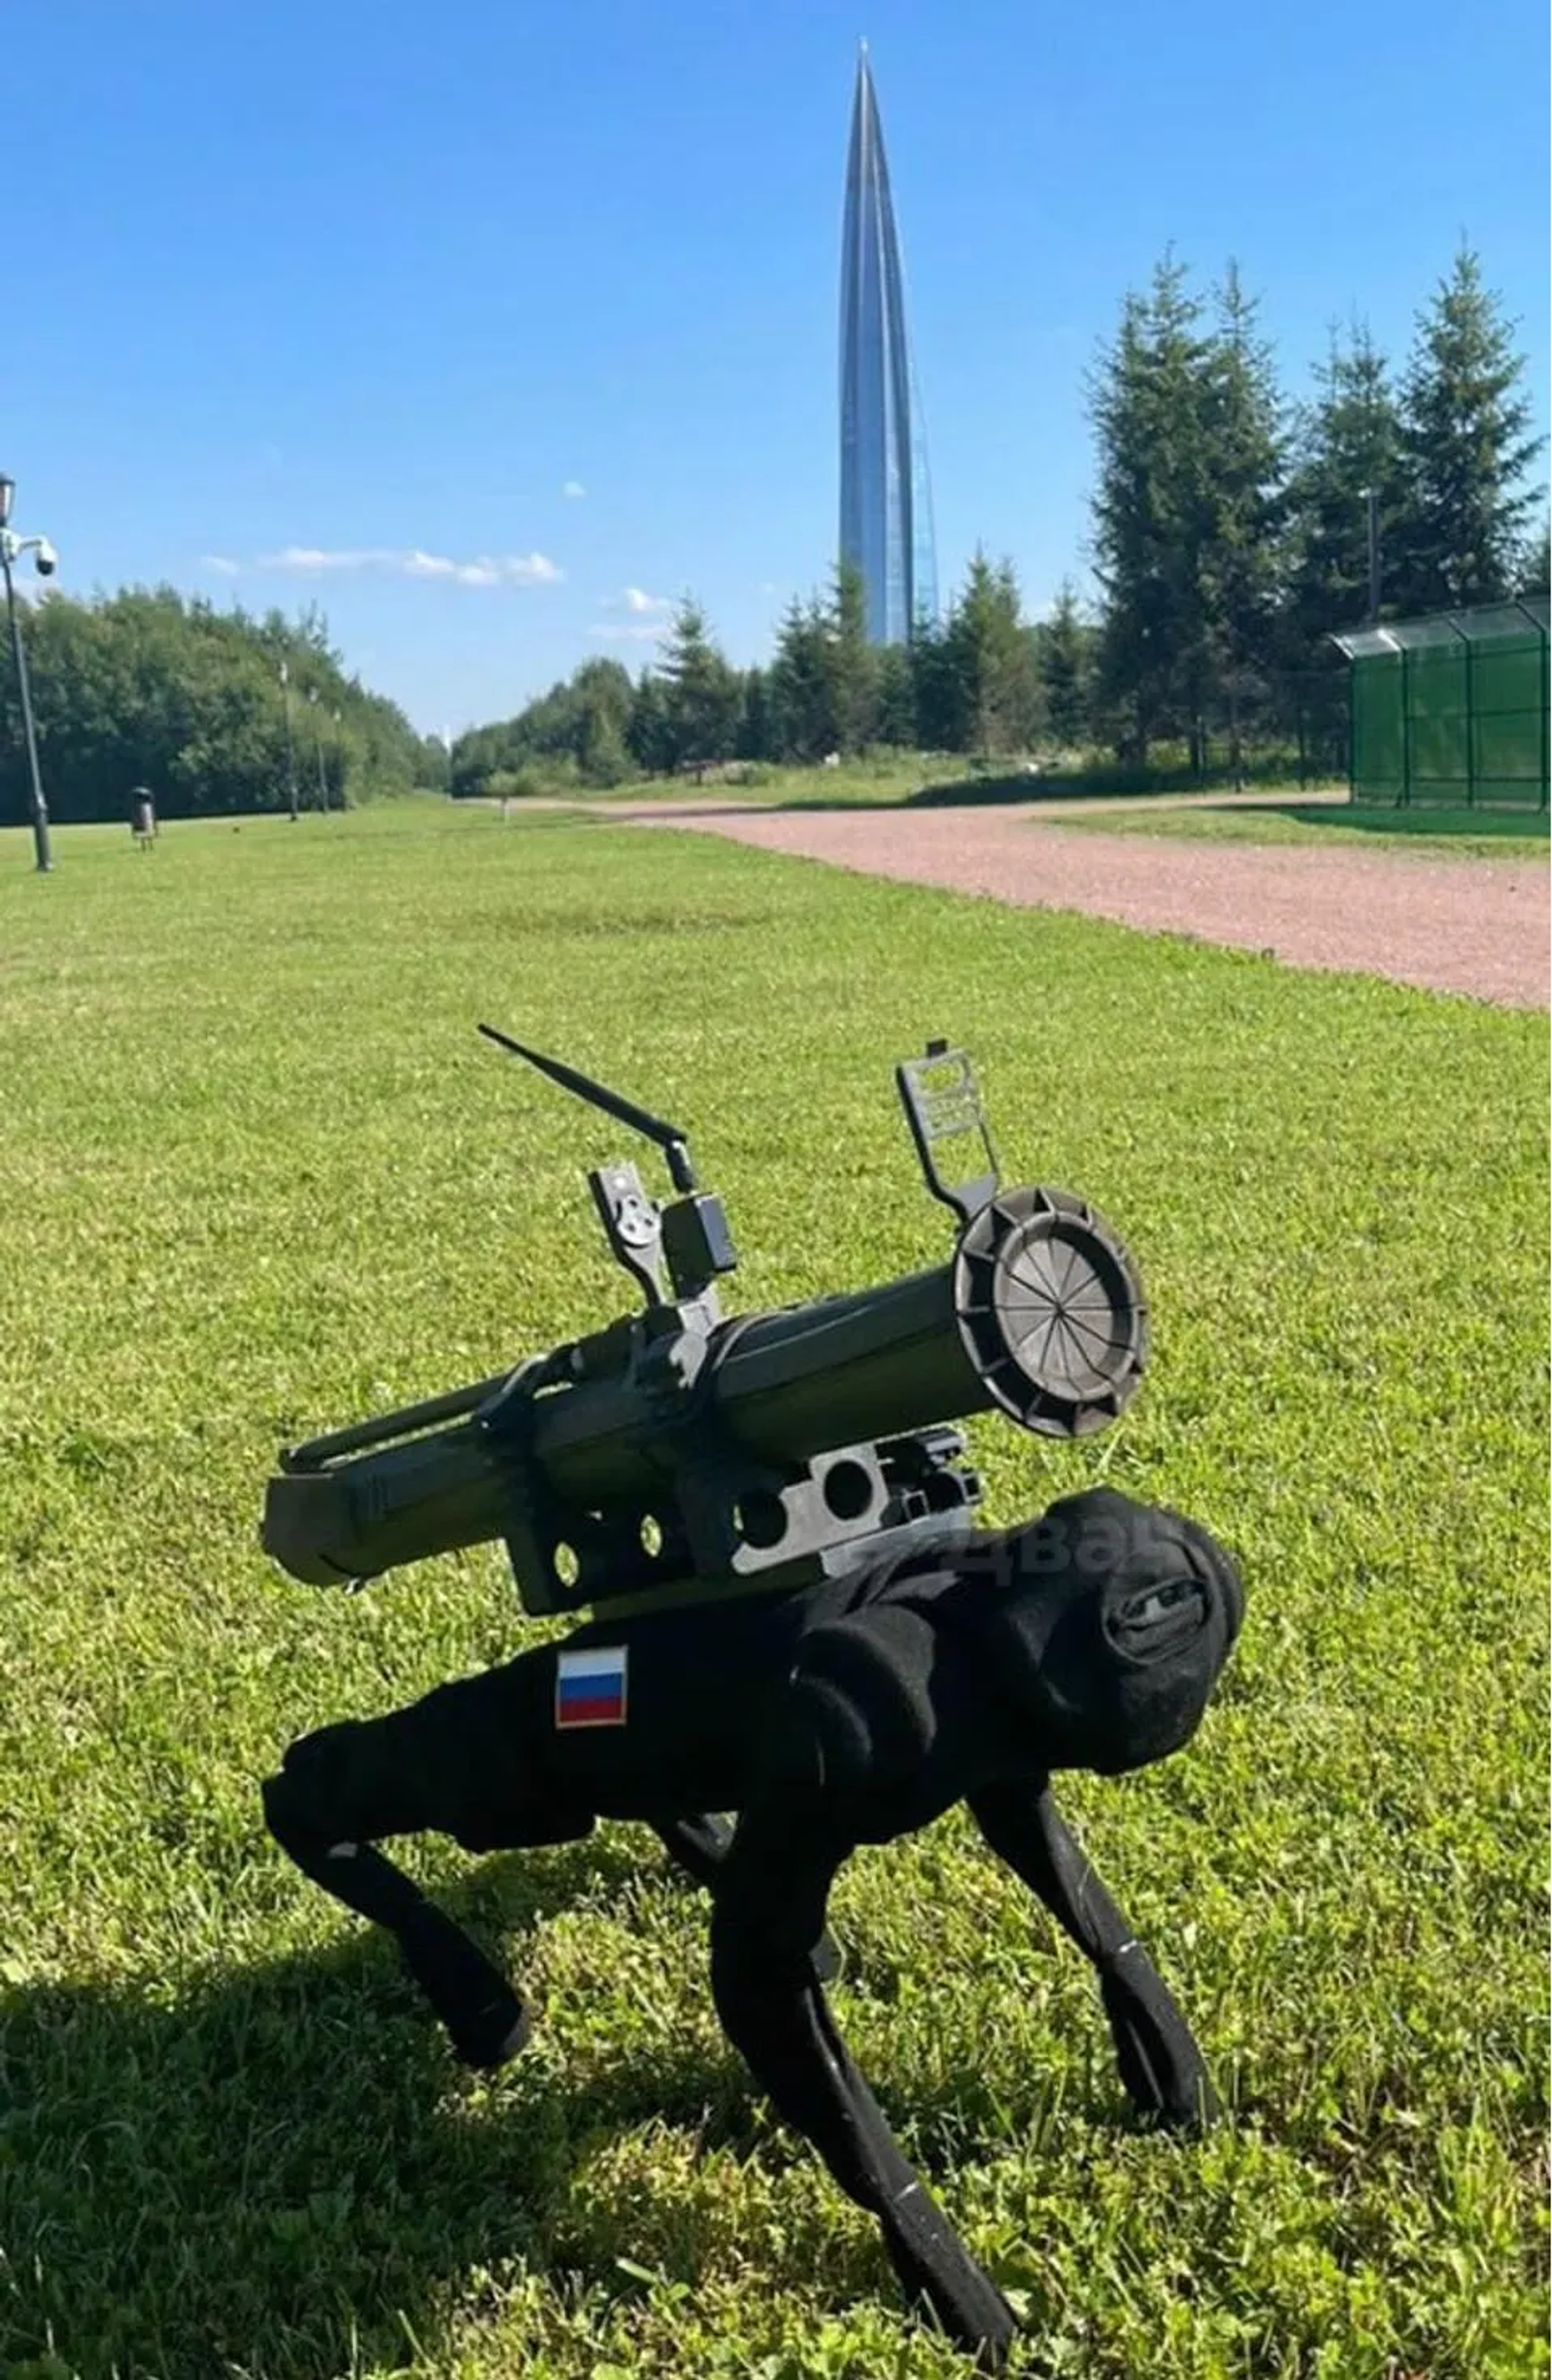 RPG launcher-equipped robot dog design by Russian company Intellect Machine. - Sputnik International, 1920, 20.10.2023